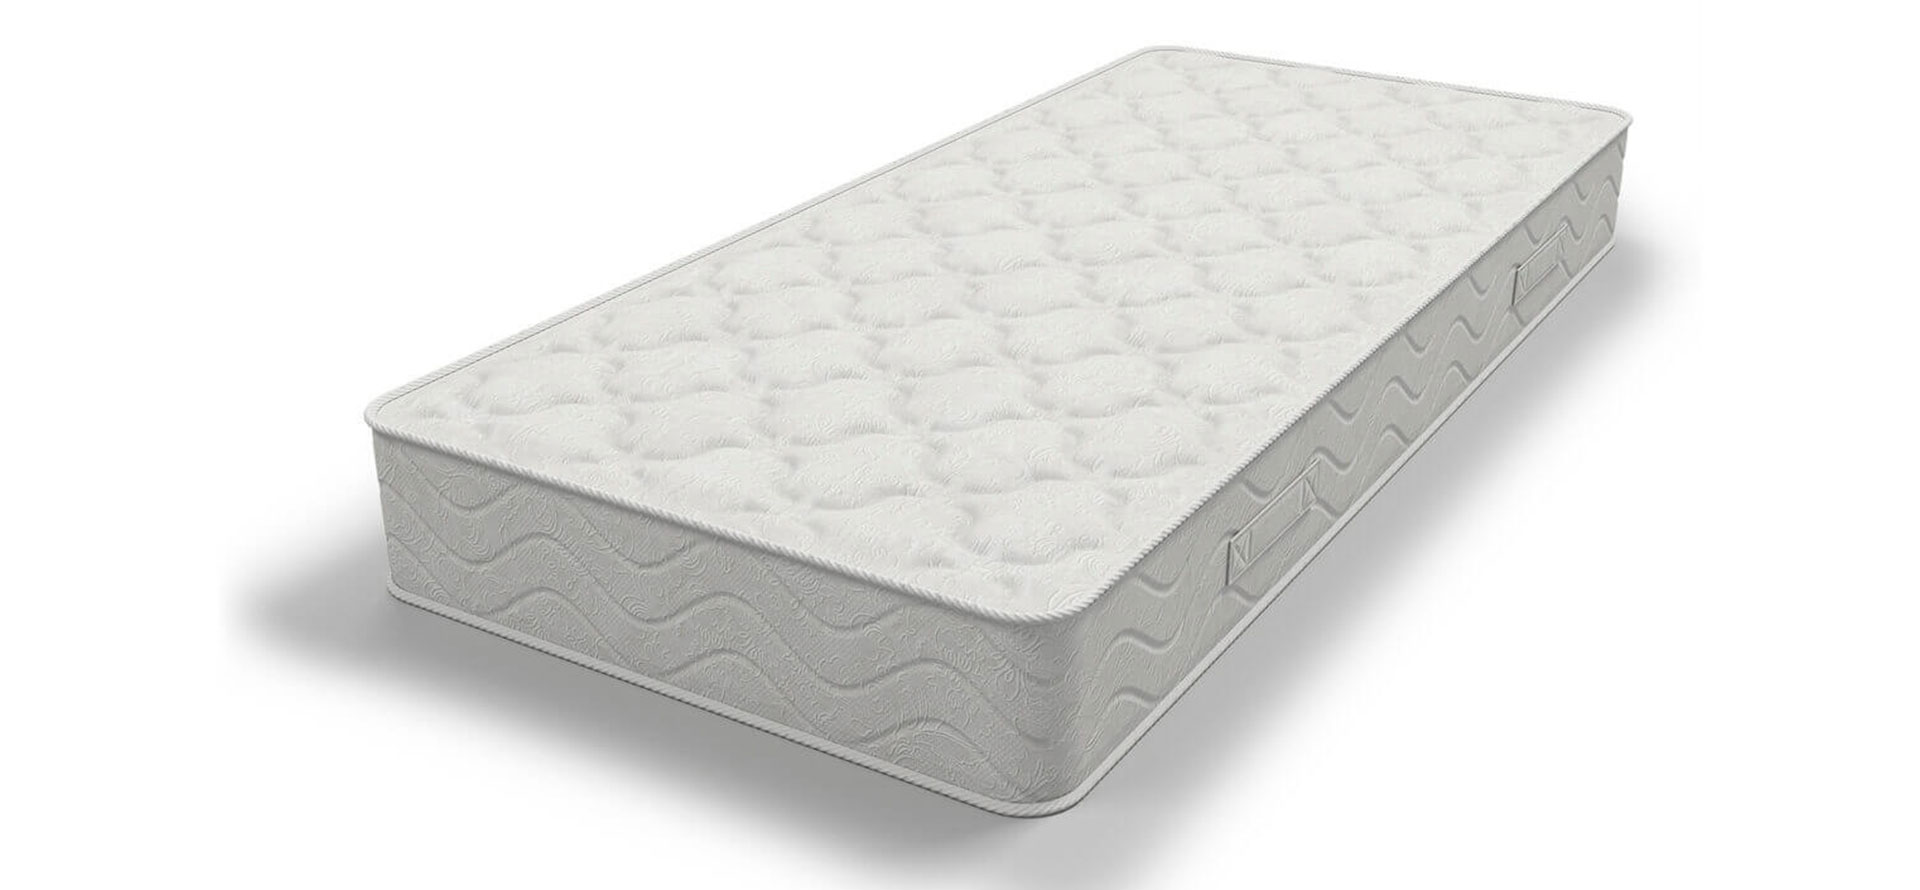 Best twin xl size mattress.